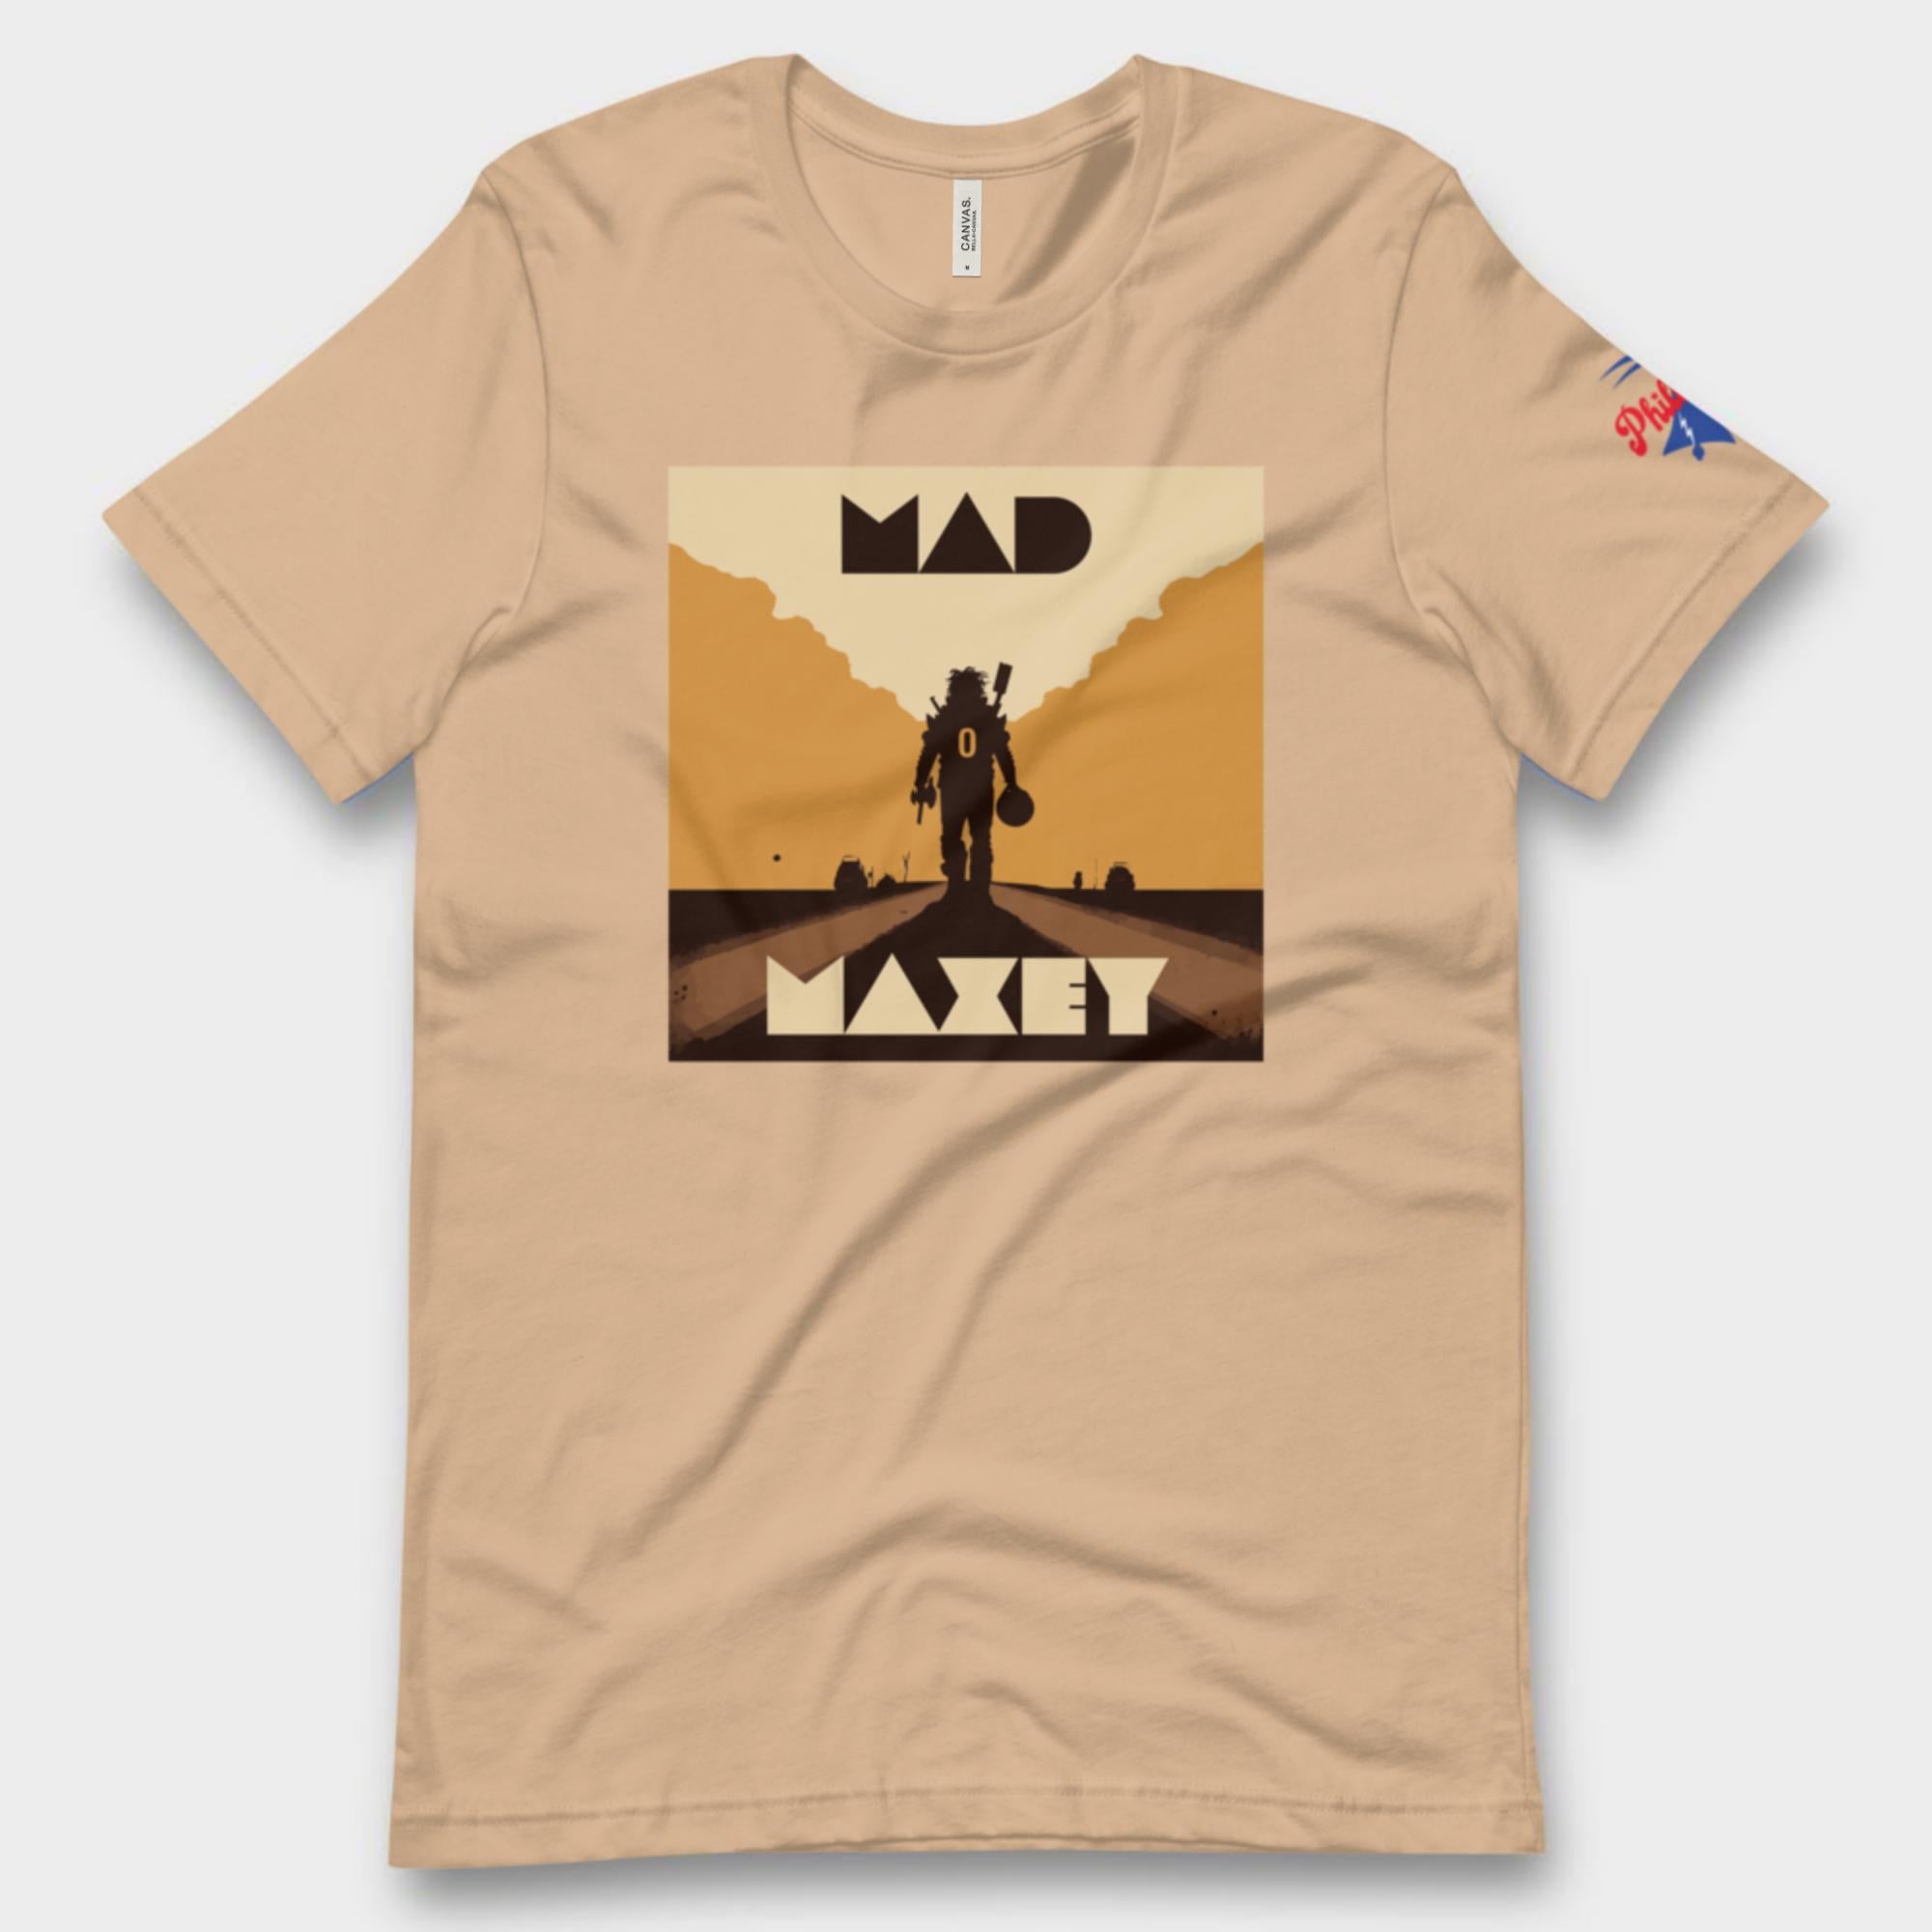 "Mad Maxey" Tee